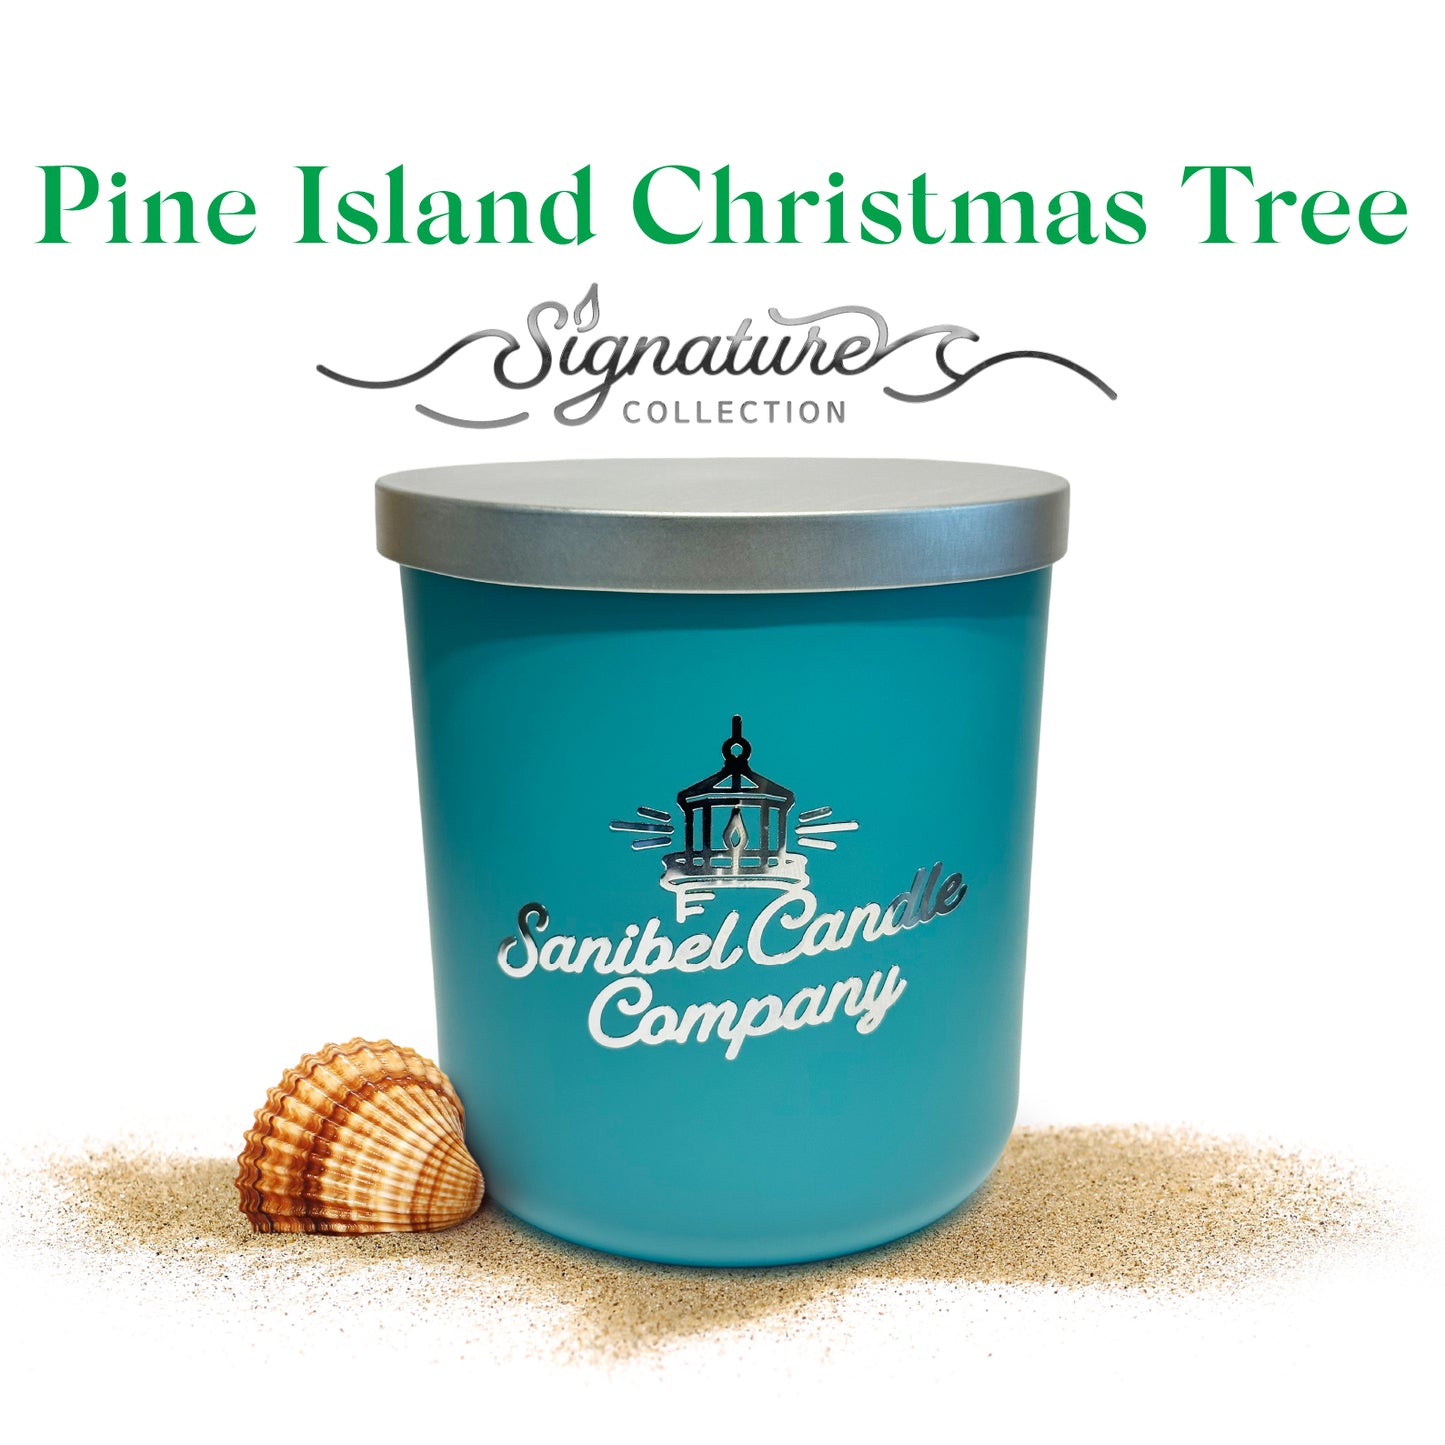 Pine Island Christmas Tree - Signature Candle - 12 oz